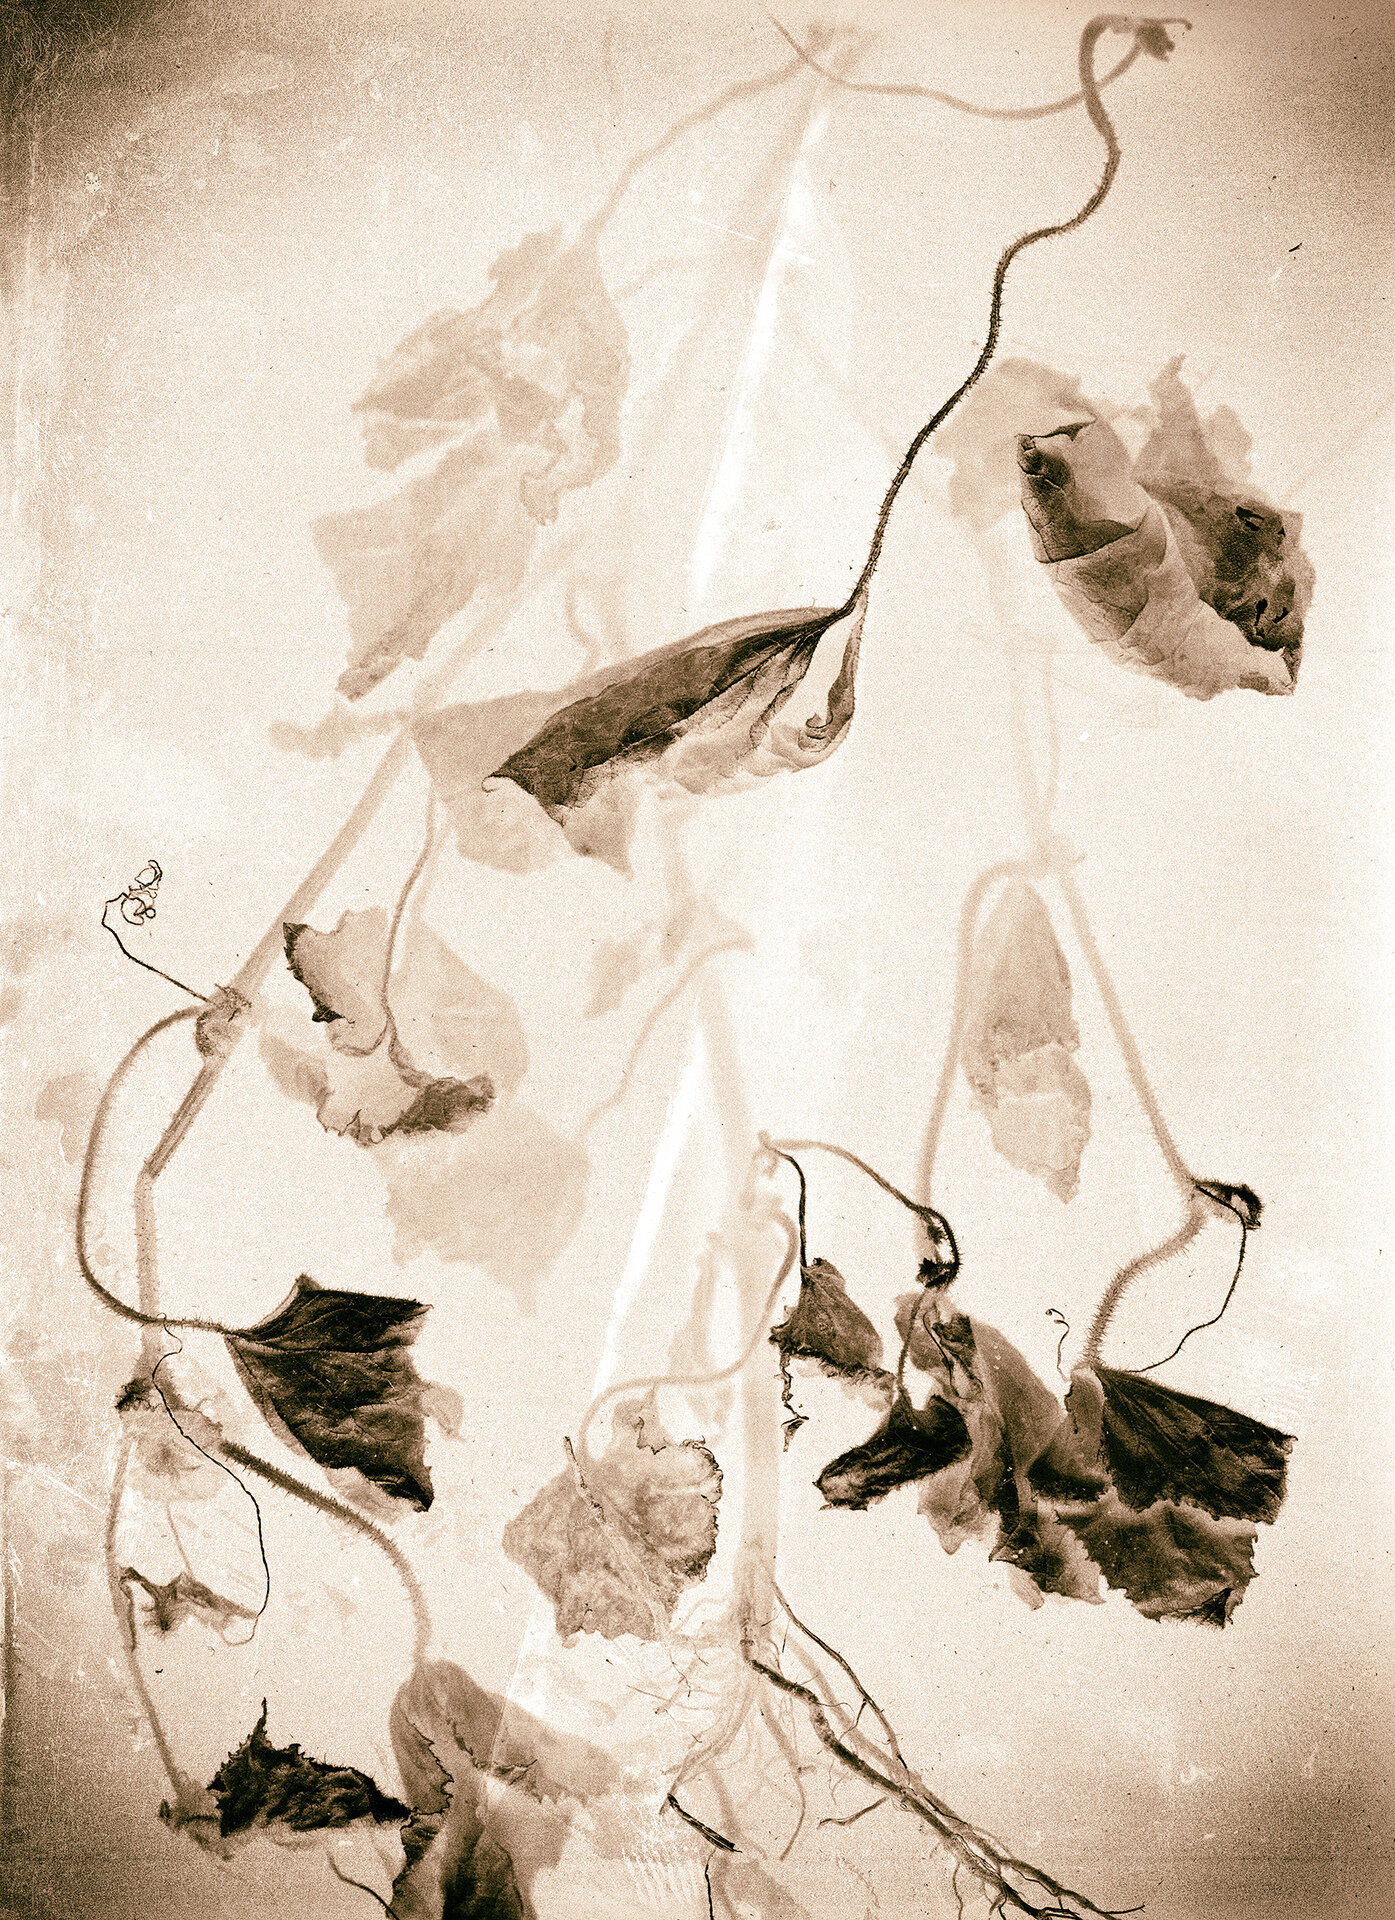   Dried Cucumber Vine,  2020  Archival pigment print  20" x 14.5" 